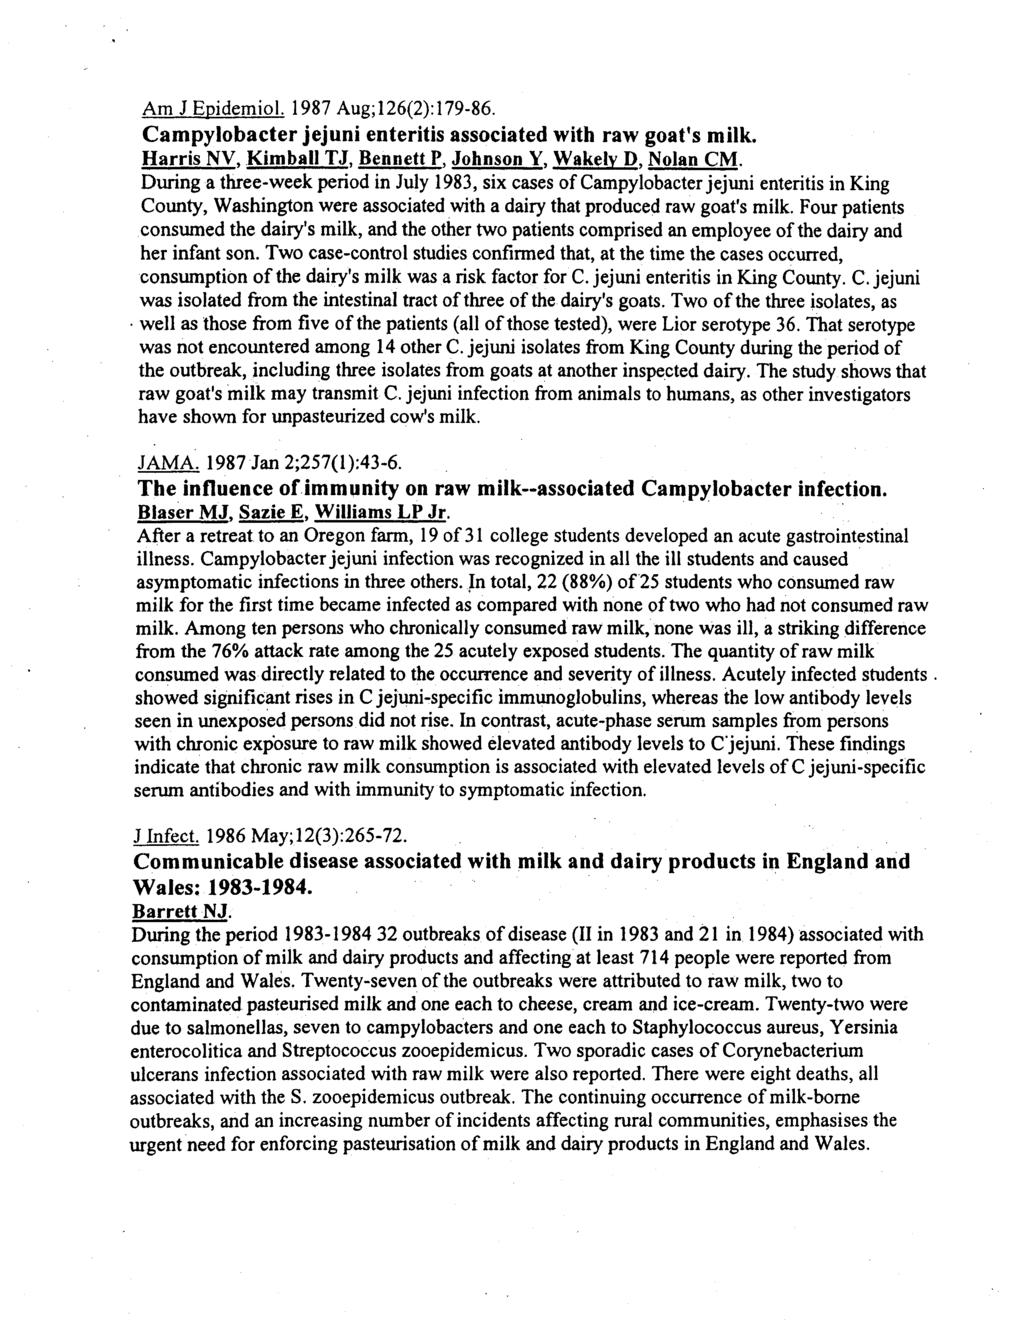 Am J Epidemiol. 1987 Aug; 126(2): 179-86. Campylobacter jejuni enteritis associated with raw goat's milk. Harris NV, Kimball TJ, Bennett P, Johnson Y, Wakelv D, Nolan CM.